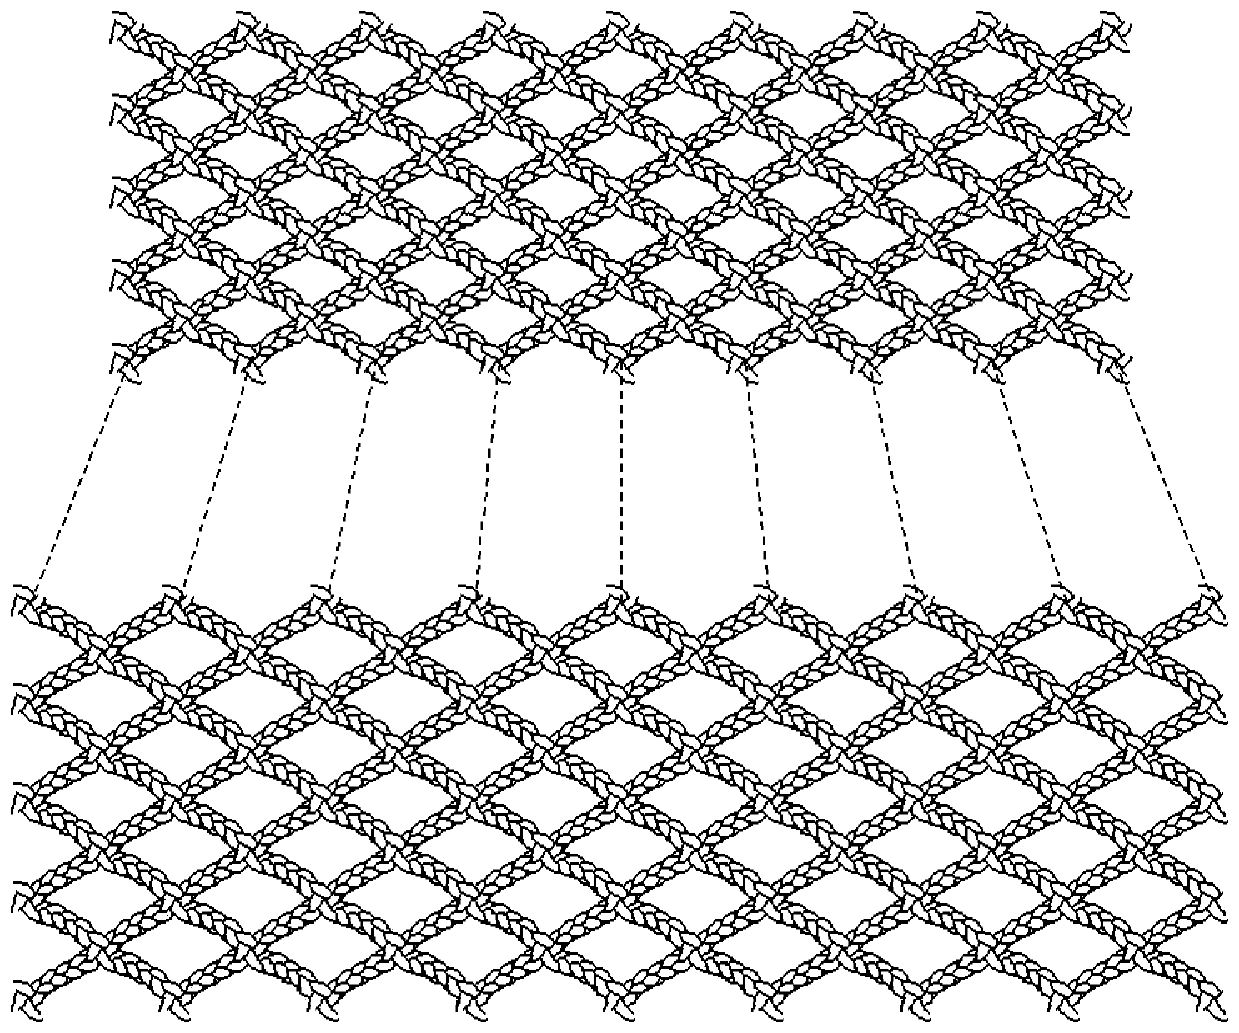 Weaving method of variable-mesh knotless net